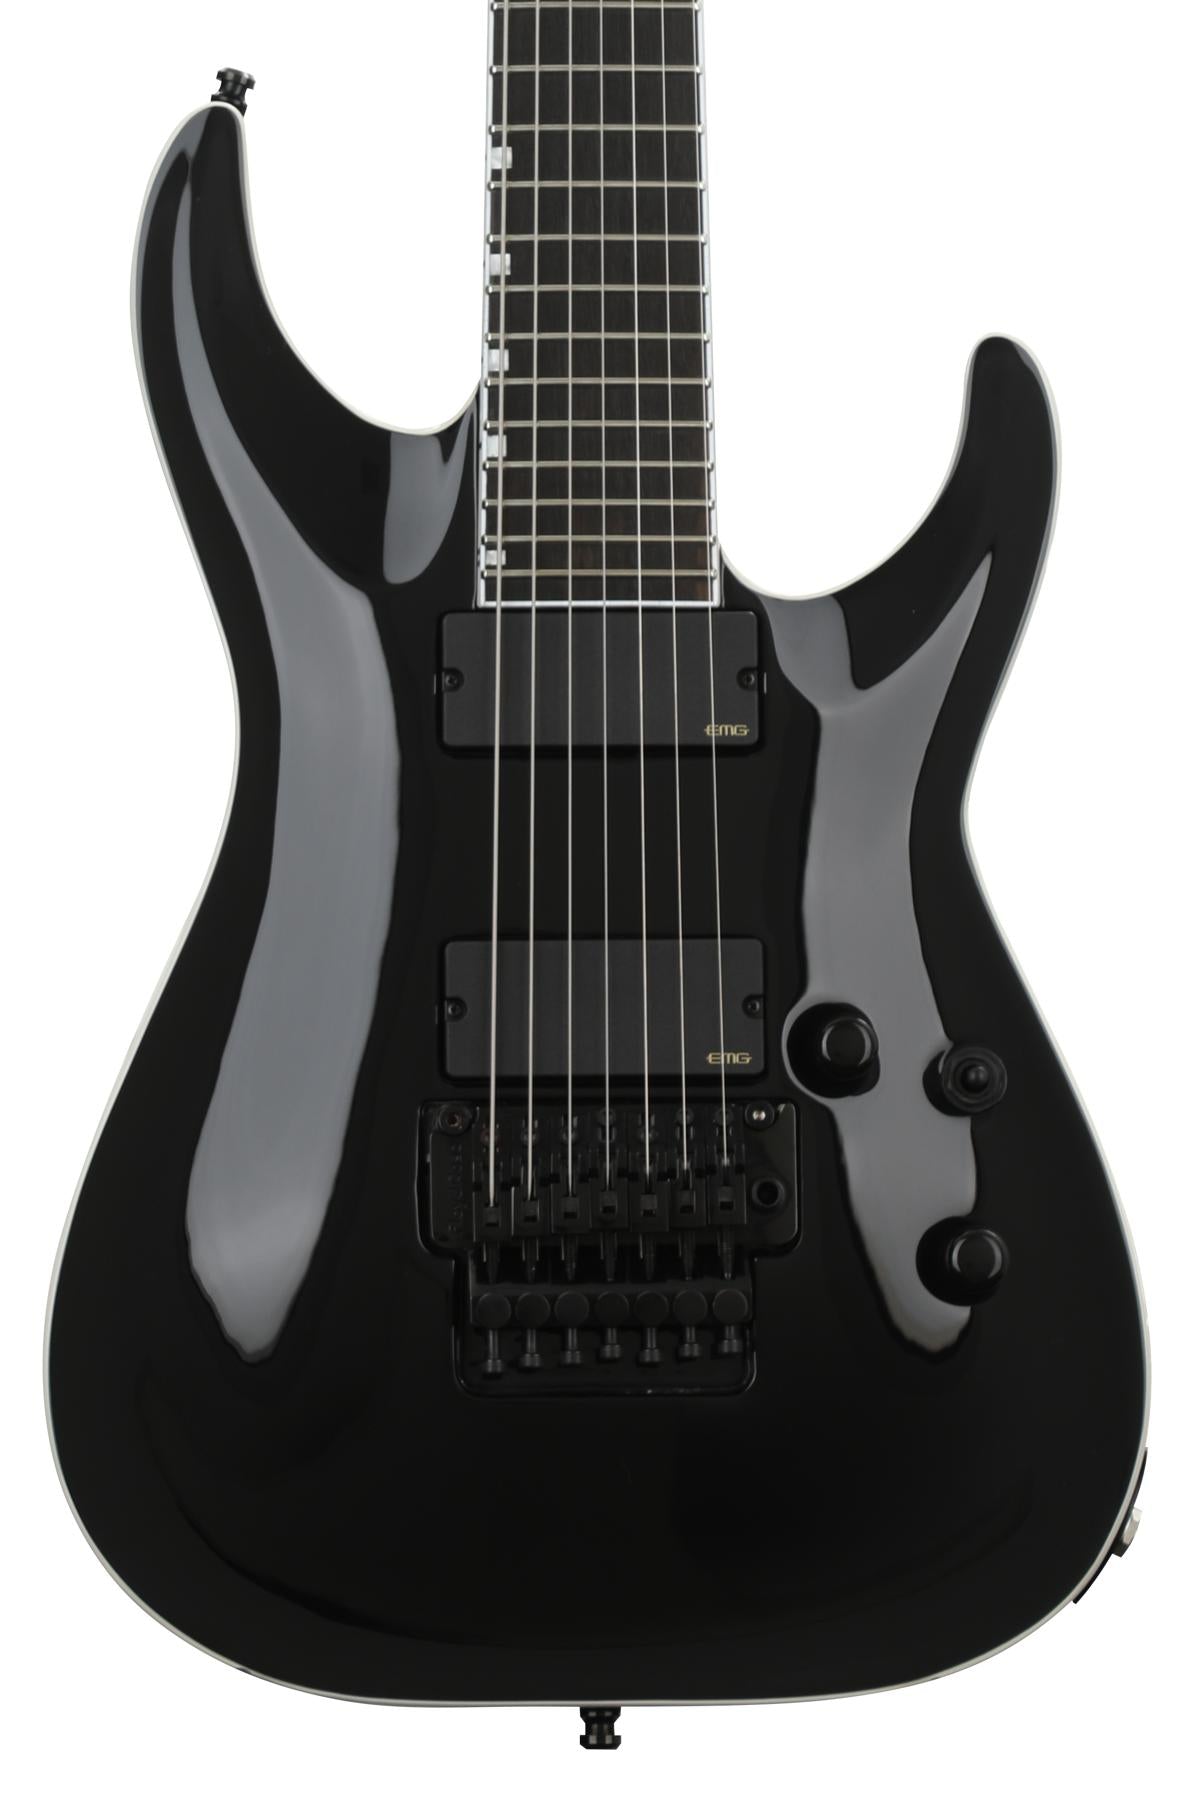 ESP E-II Horizon FR-7 - Black [Made in Japan] Electric Guitar